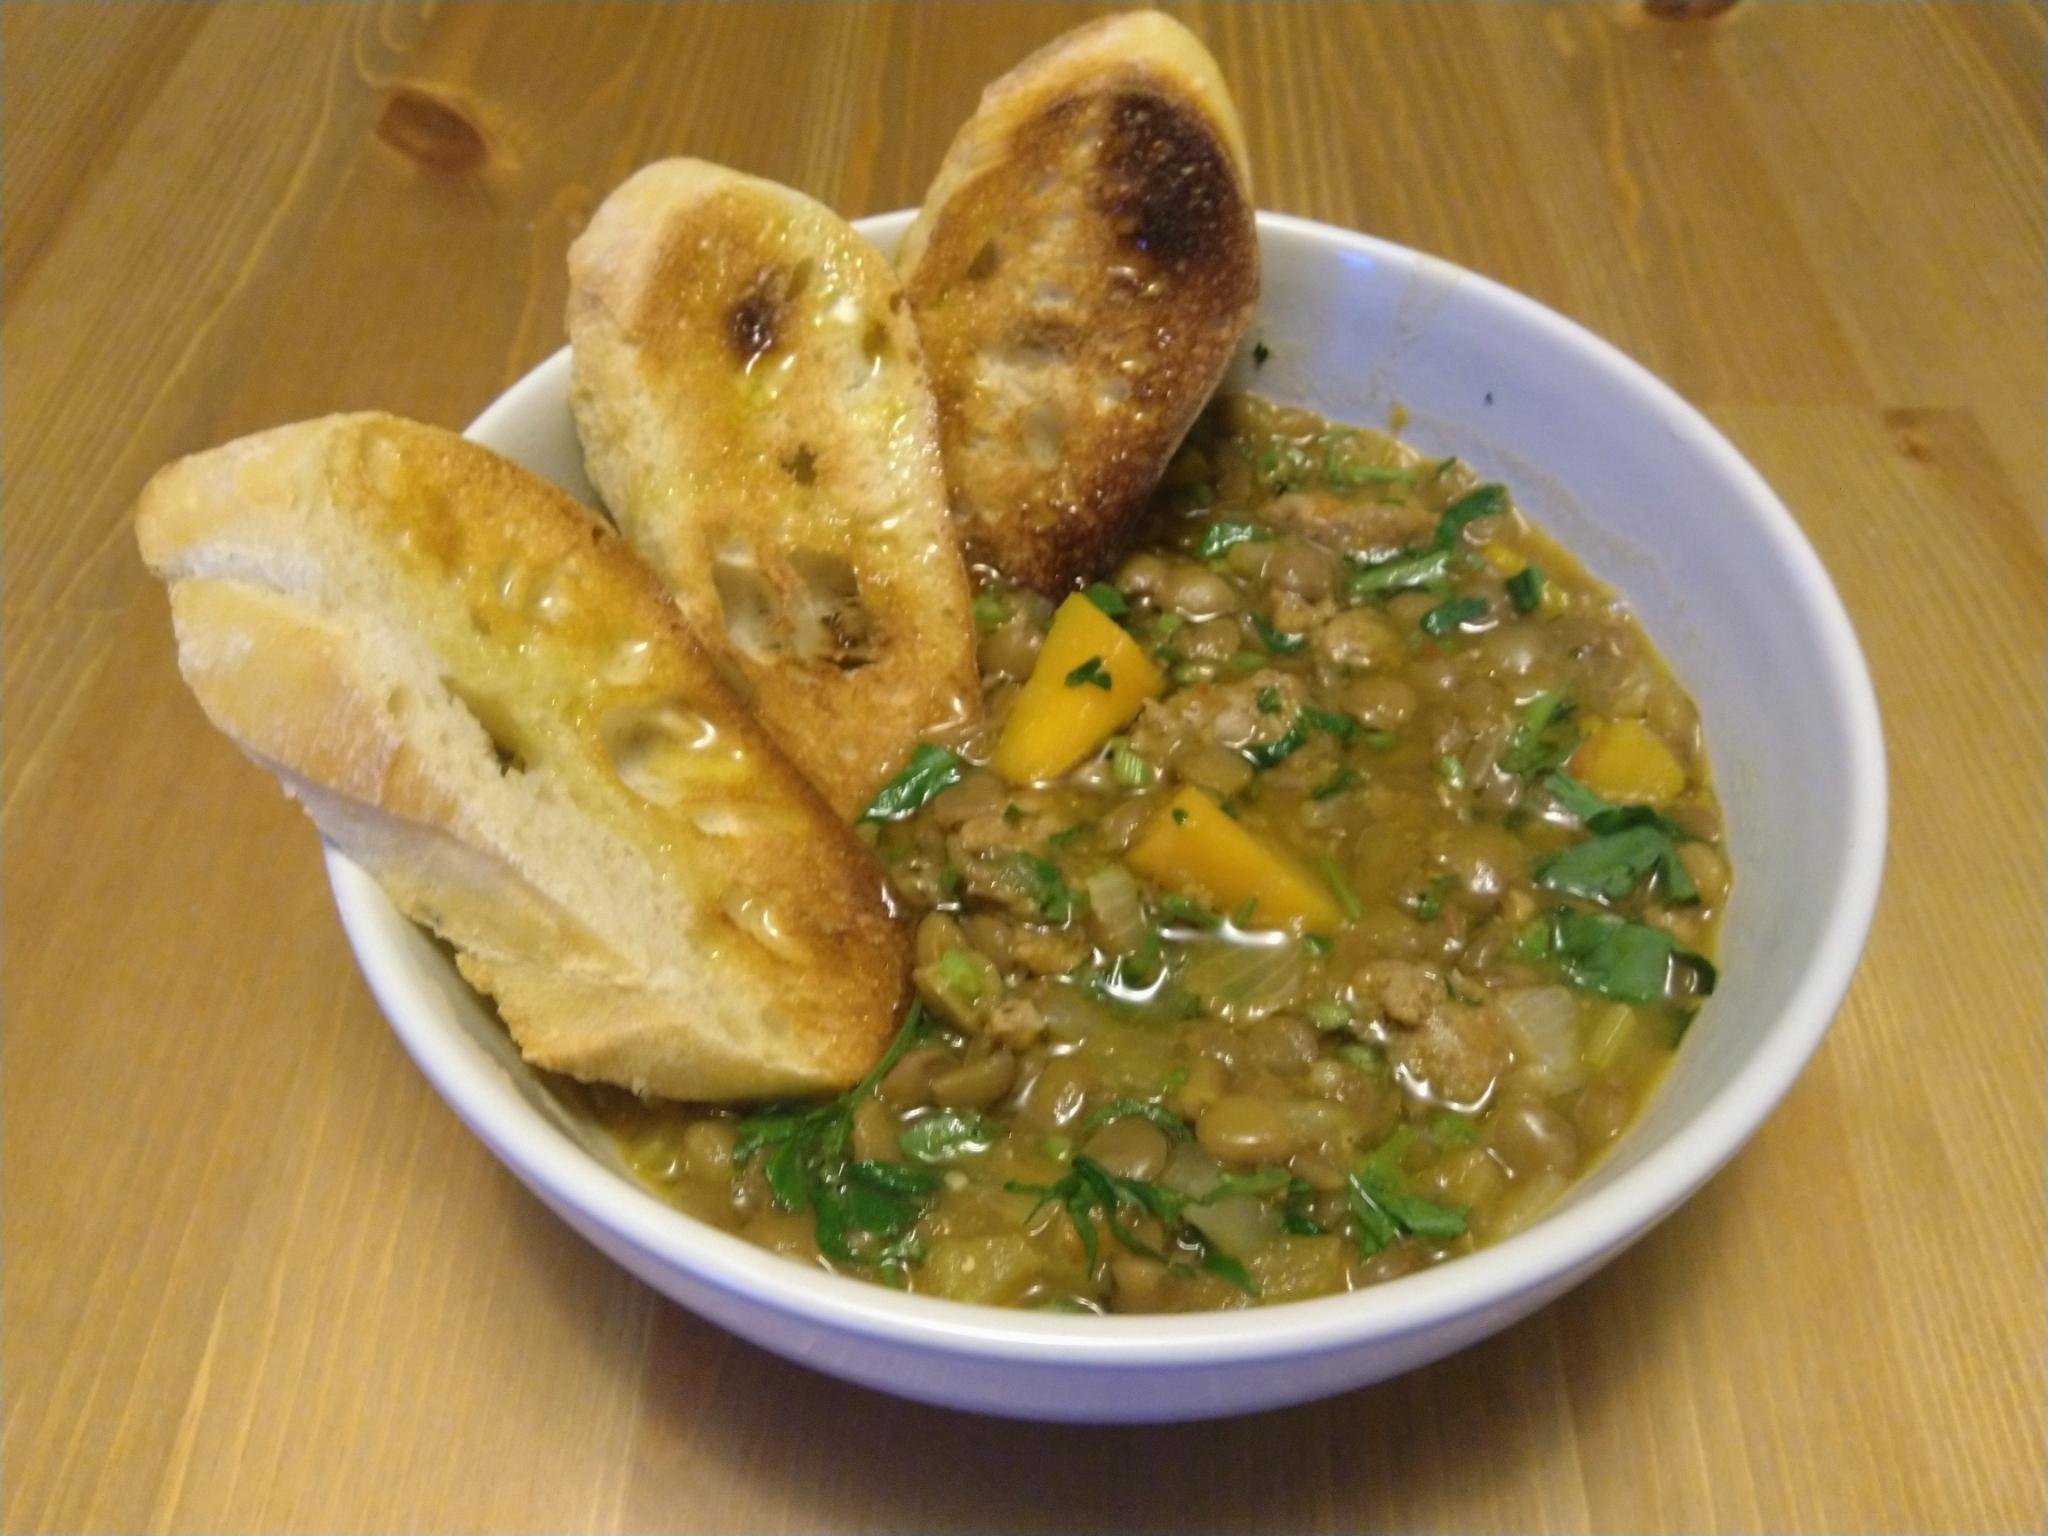 Italian sausage lentil stew